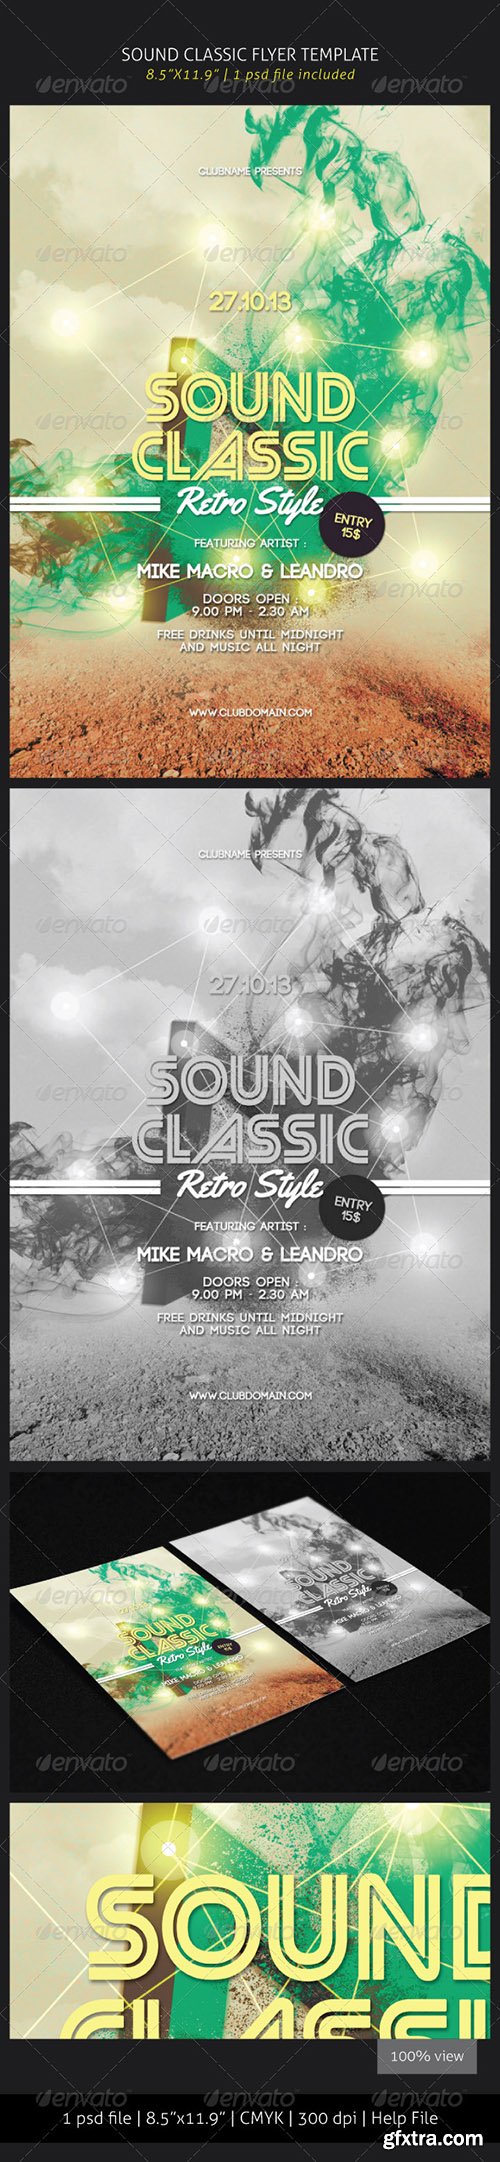 Sound Classic Flyer 5833414